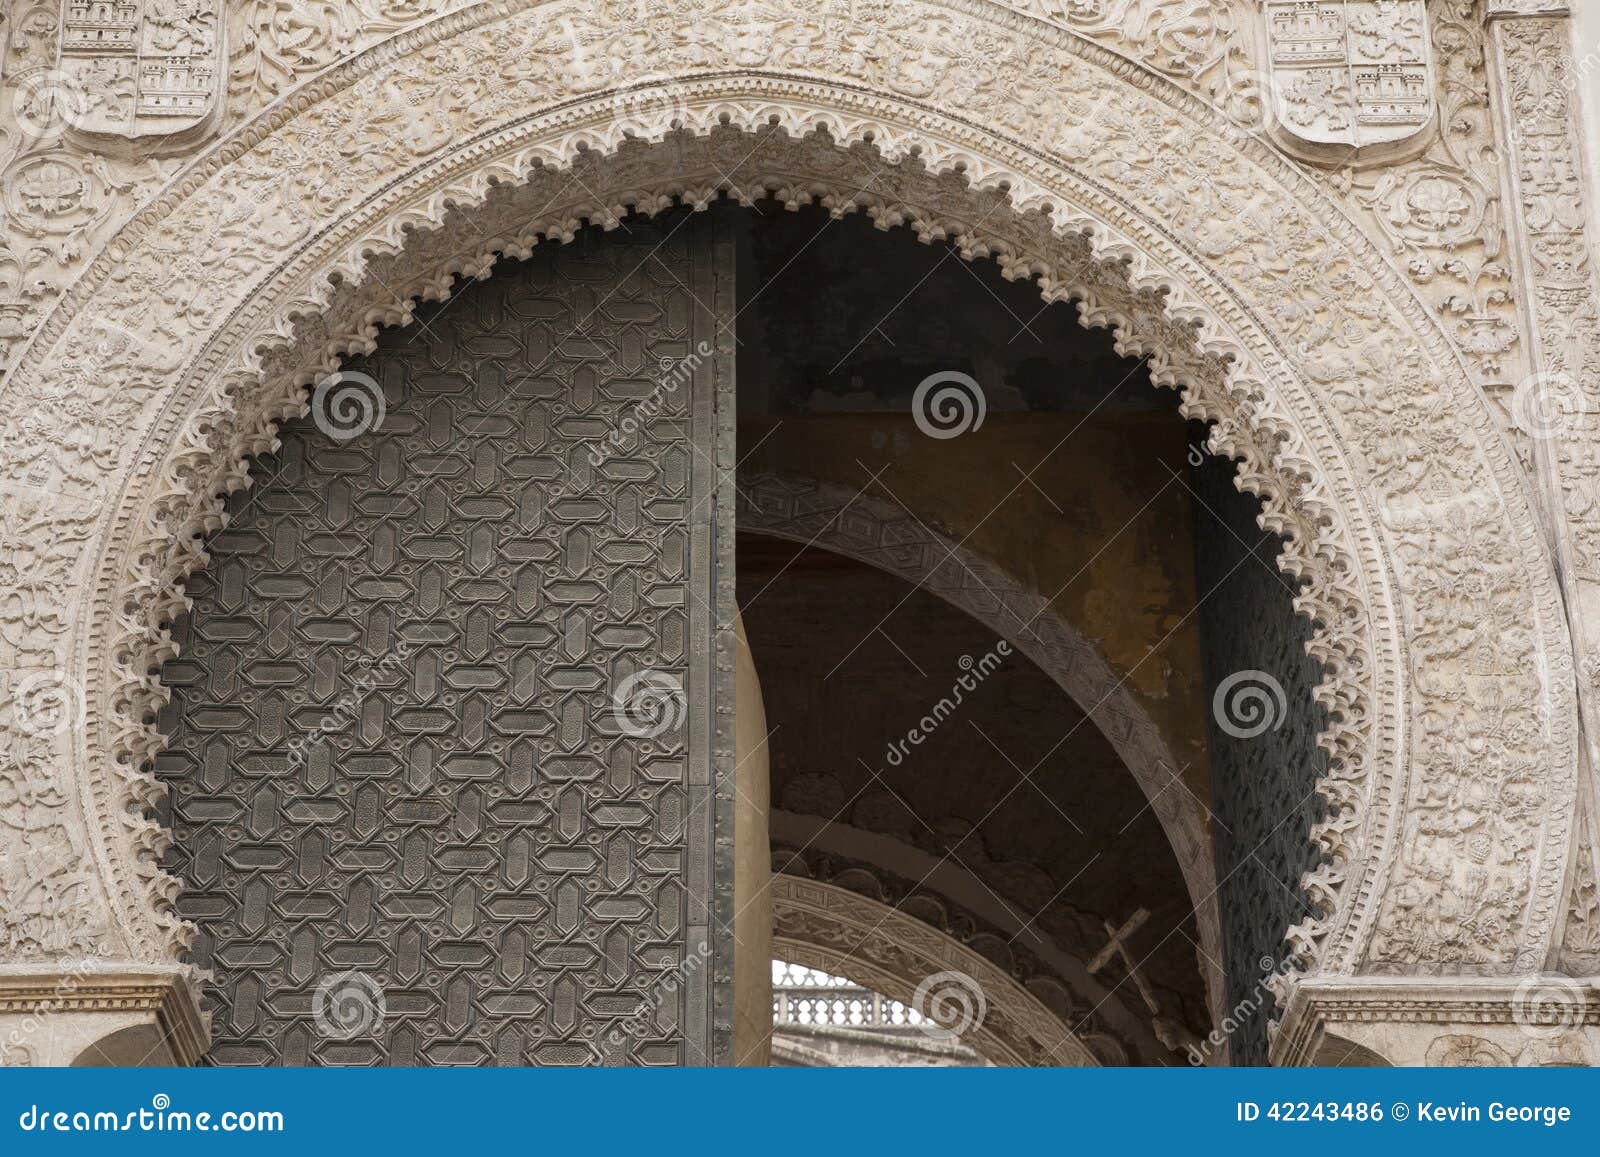 portal el perdon entrance, seville cathedral, spain